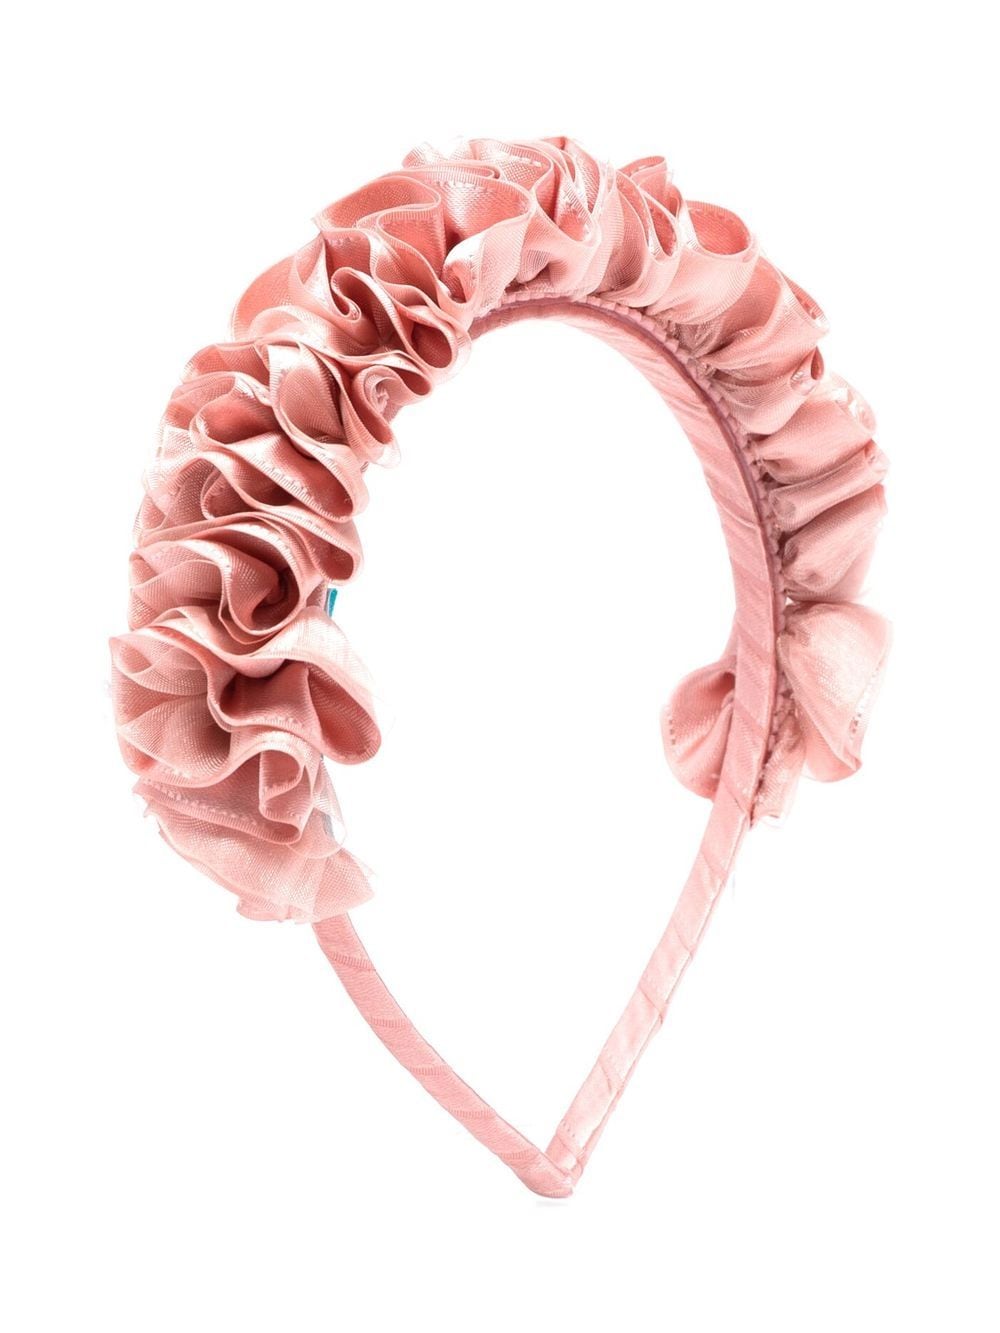 Salmon pink headband for girls